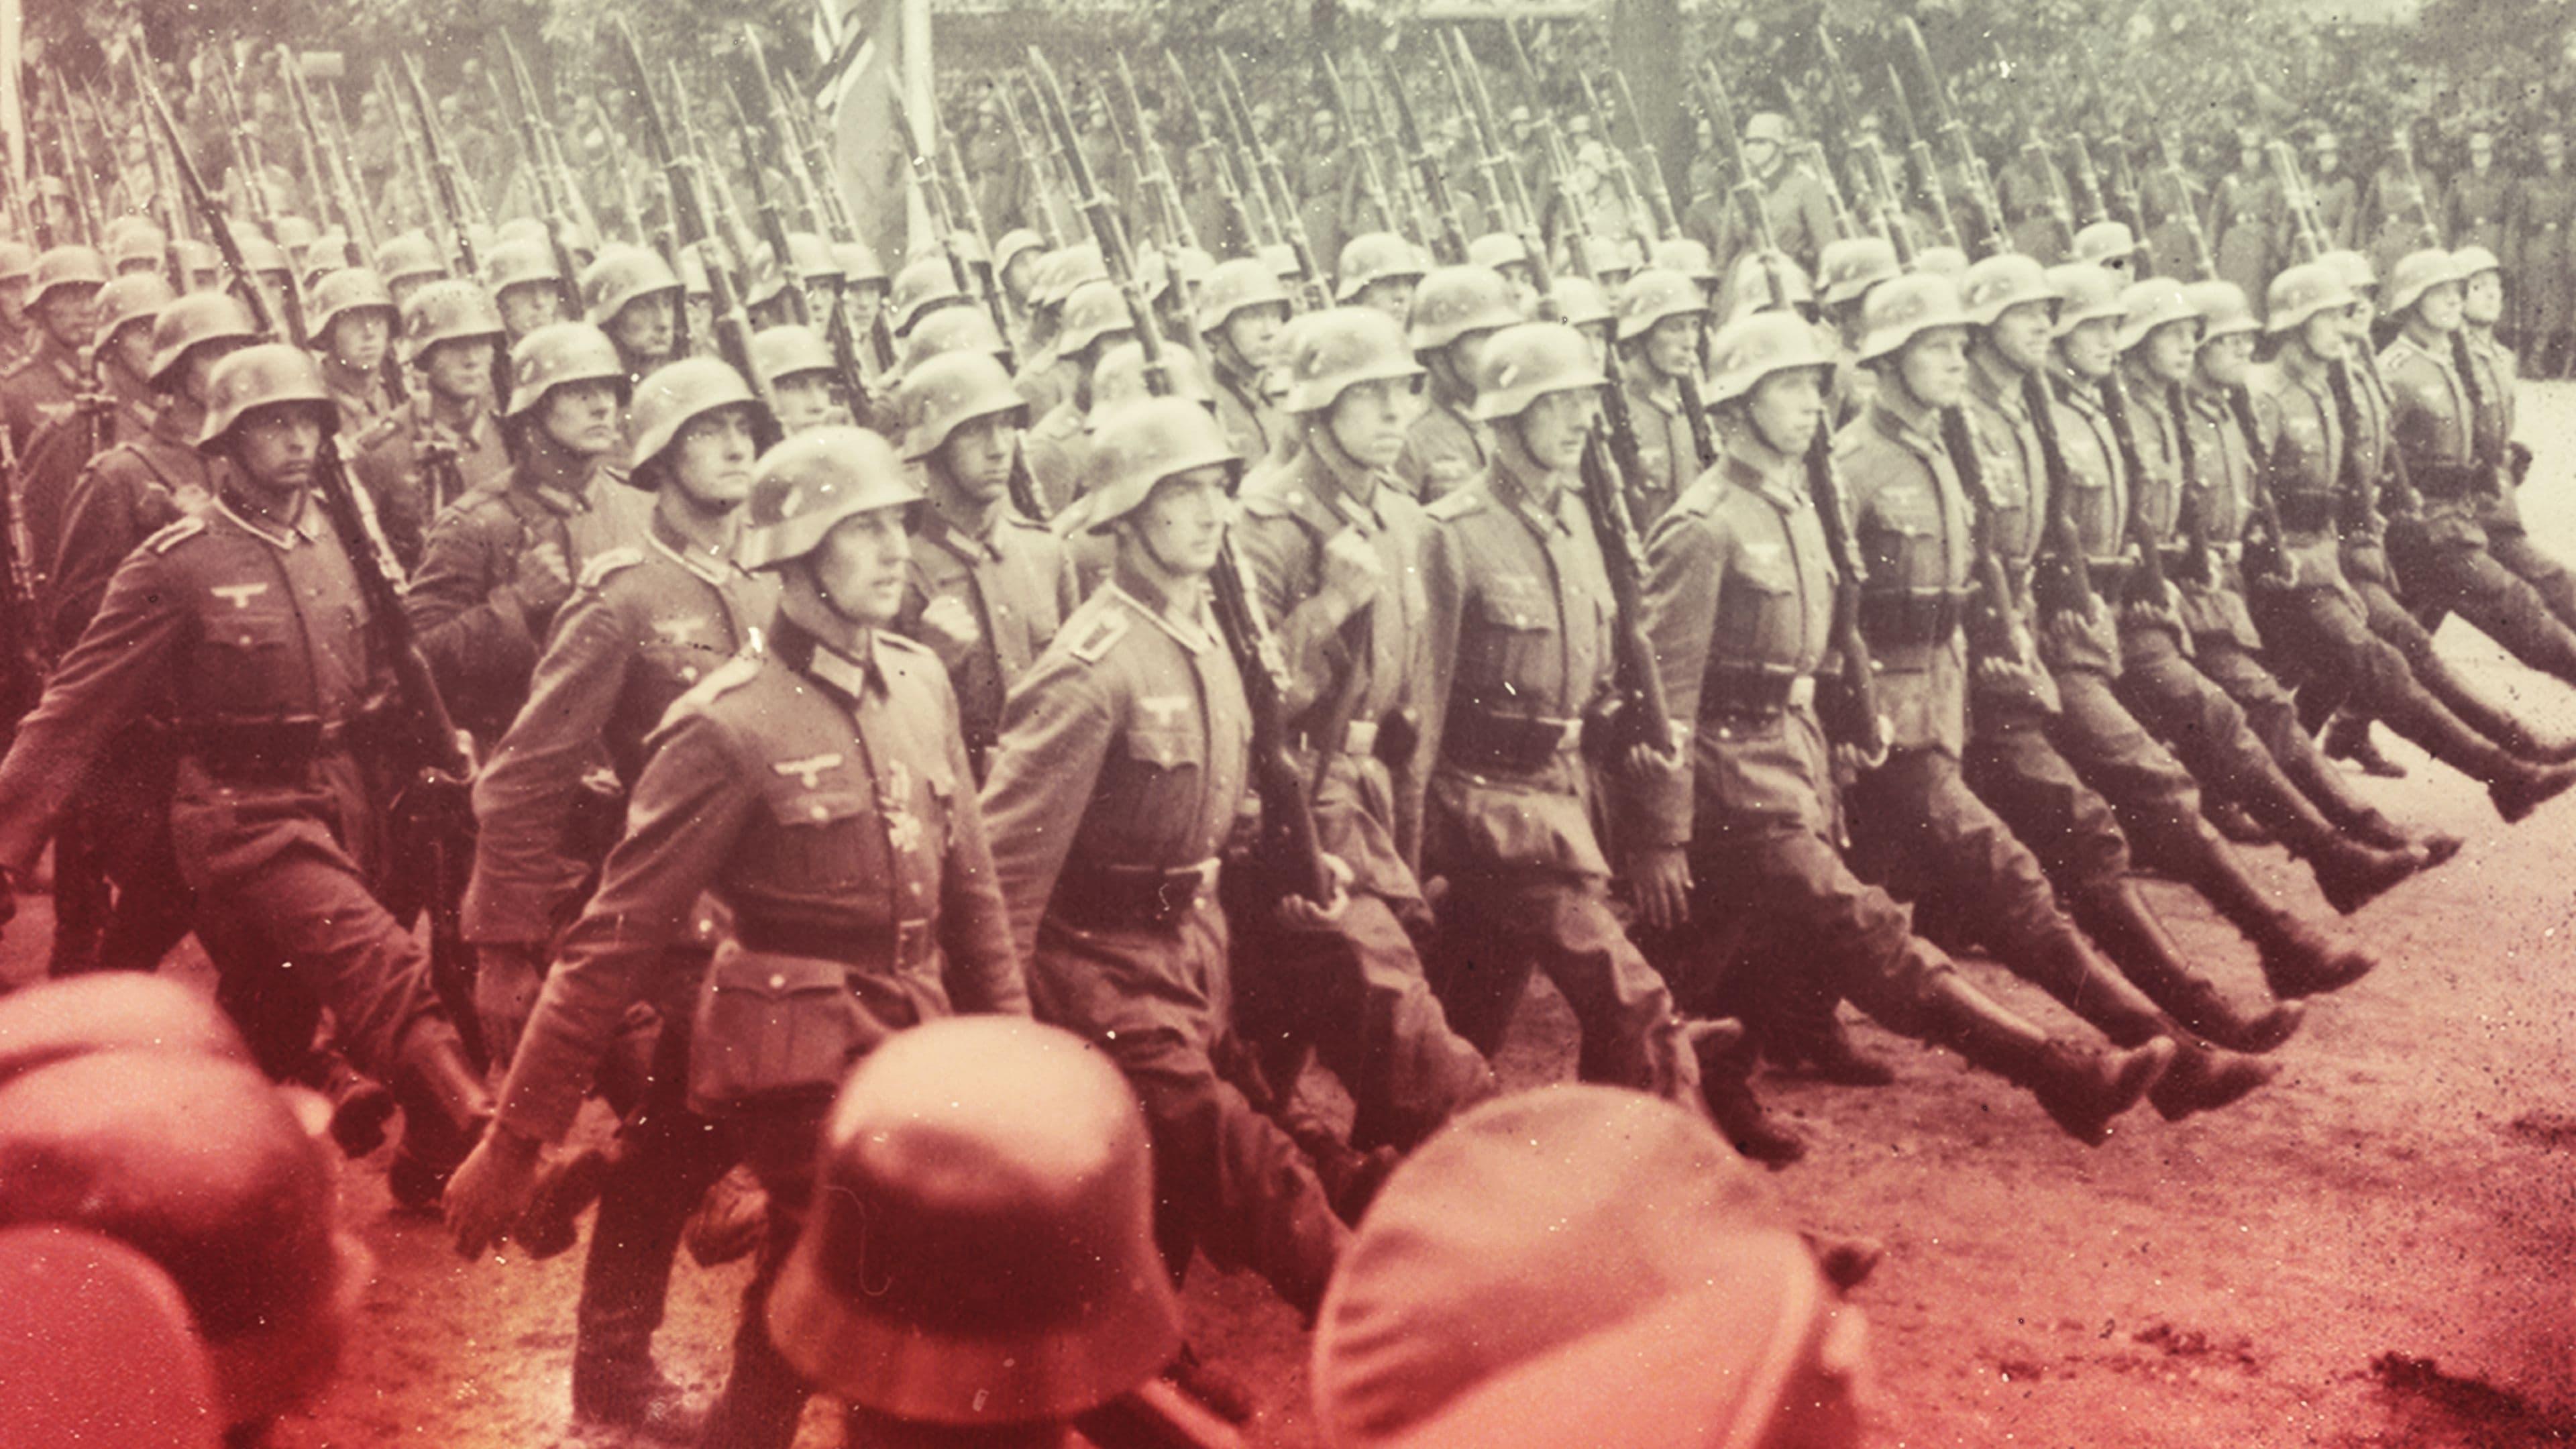 Einsatzgruppen: The Nazi Death Squads backdrop